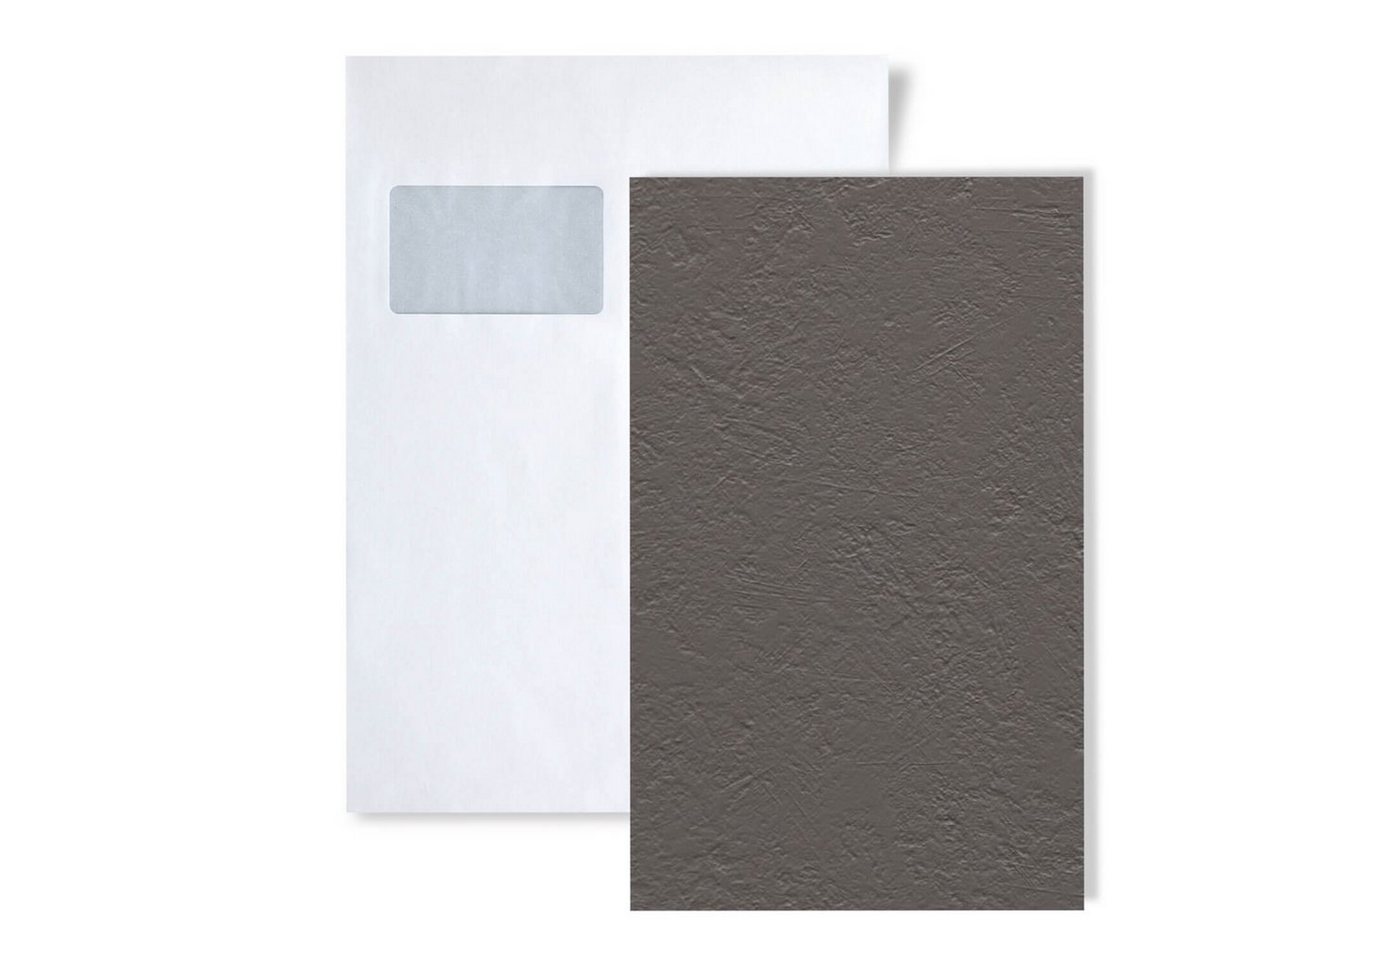 Wallface Wandpaneel S-24789-NA, BxL: 15x20 cm, (1 MUSTERSTÜCK, Produktmuster, Muster des Wandpaneels) grau, beige-grau von Wallface